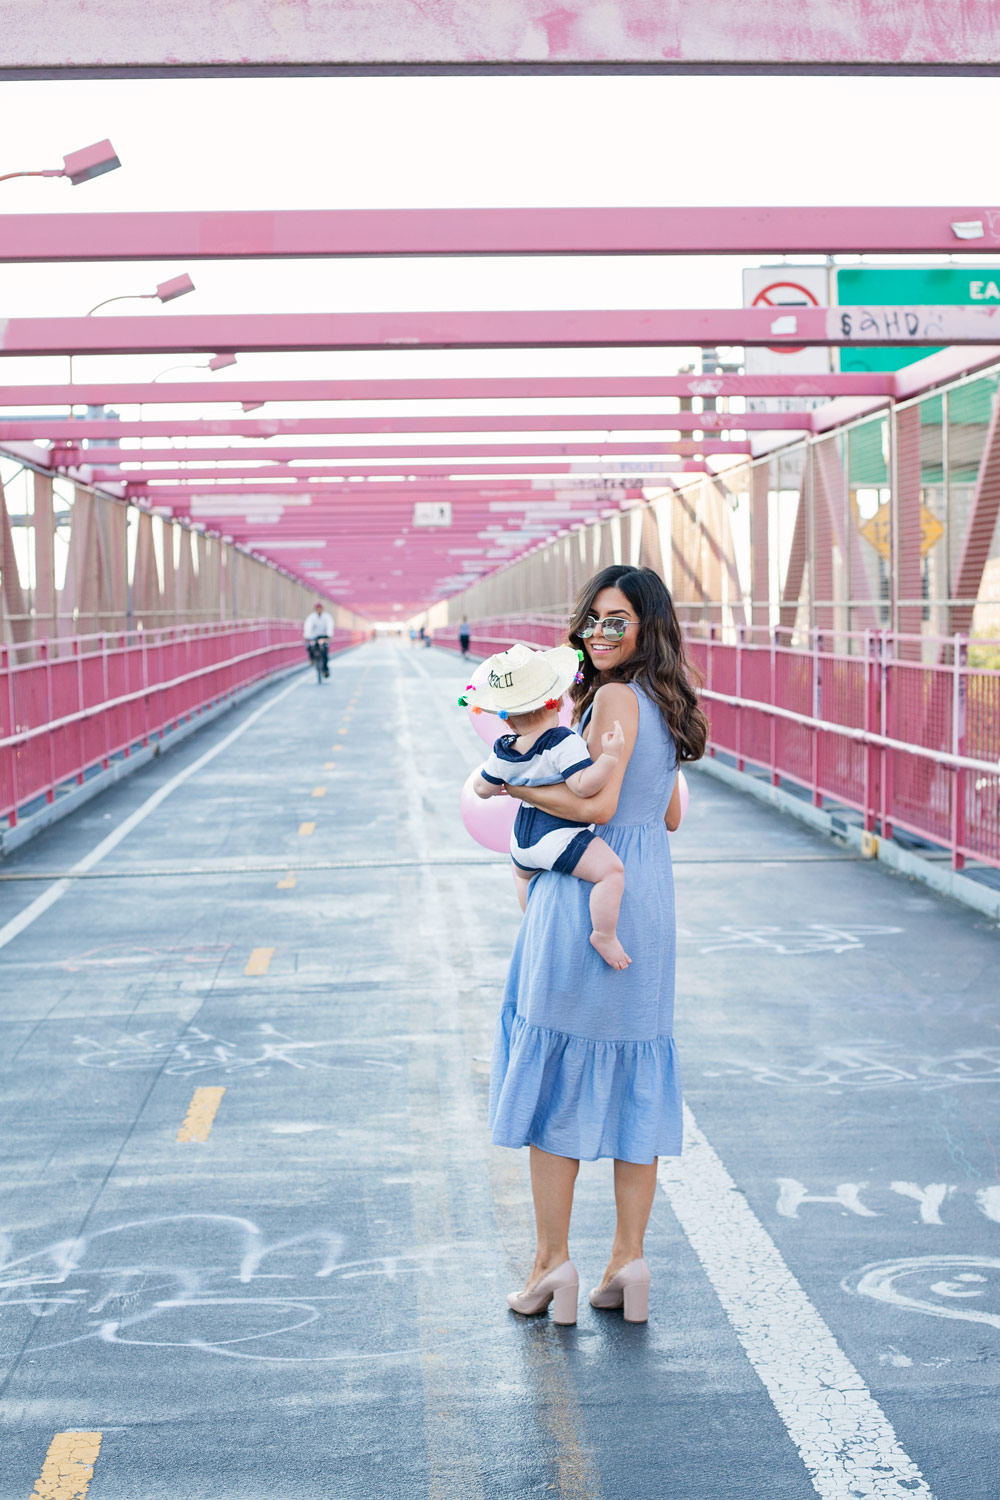 Williamsburg Bridge NYC Pink Bridge New York City Baby Fashion Blogger Shoshanna Gilroy Dress